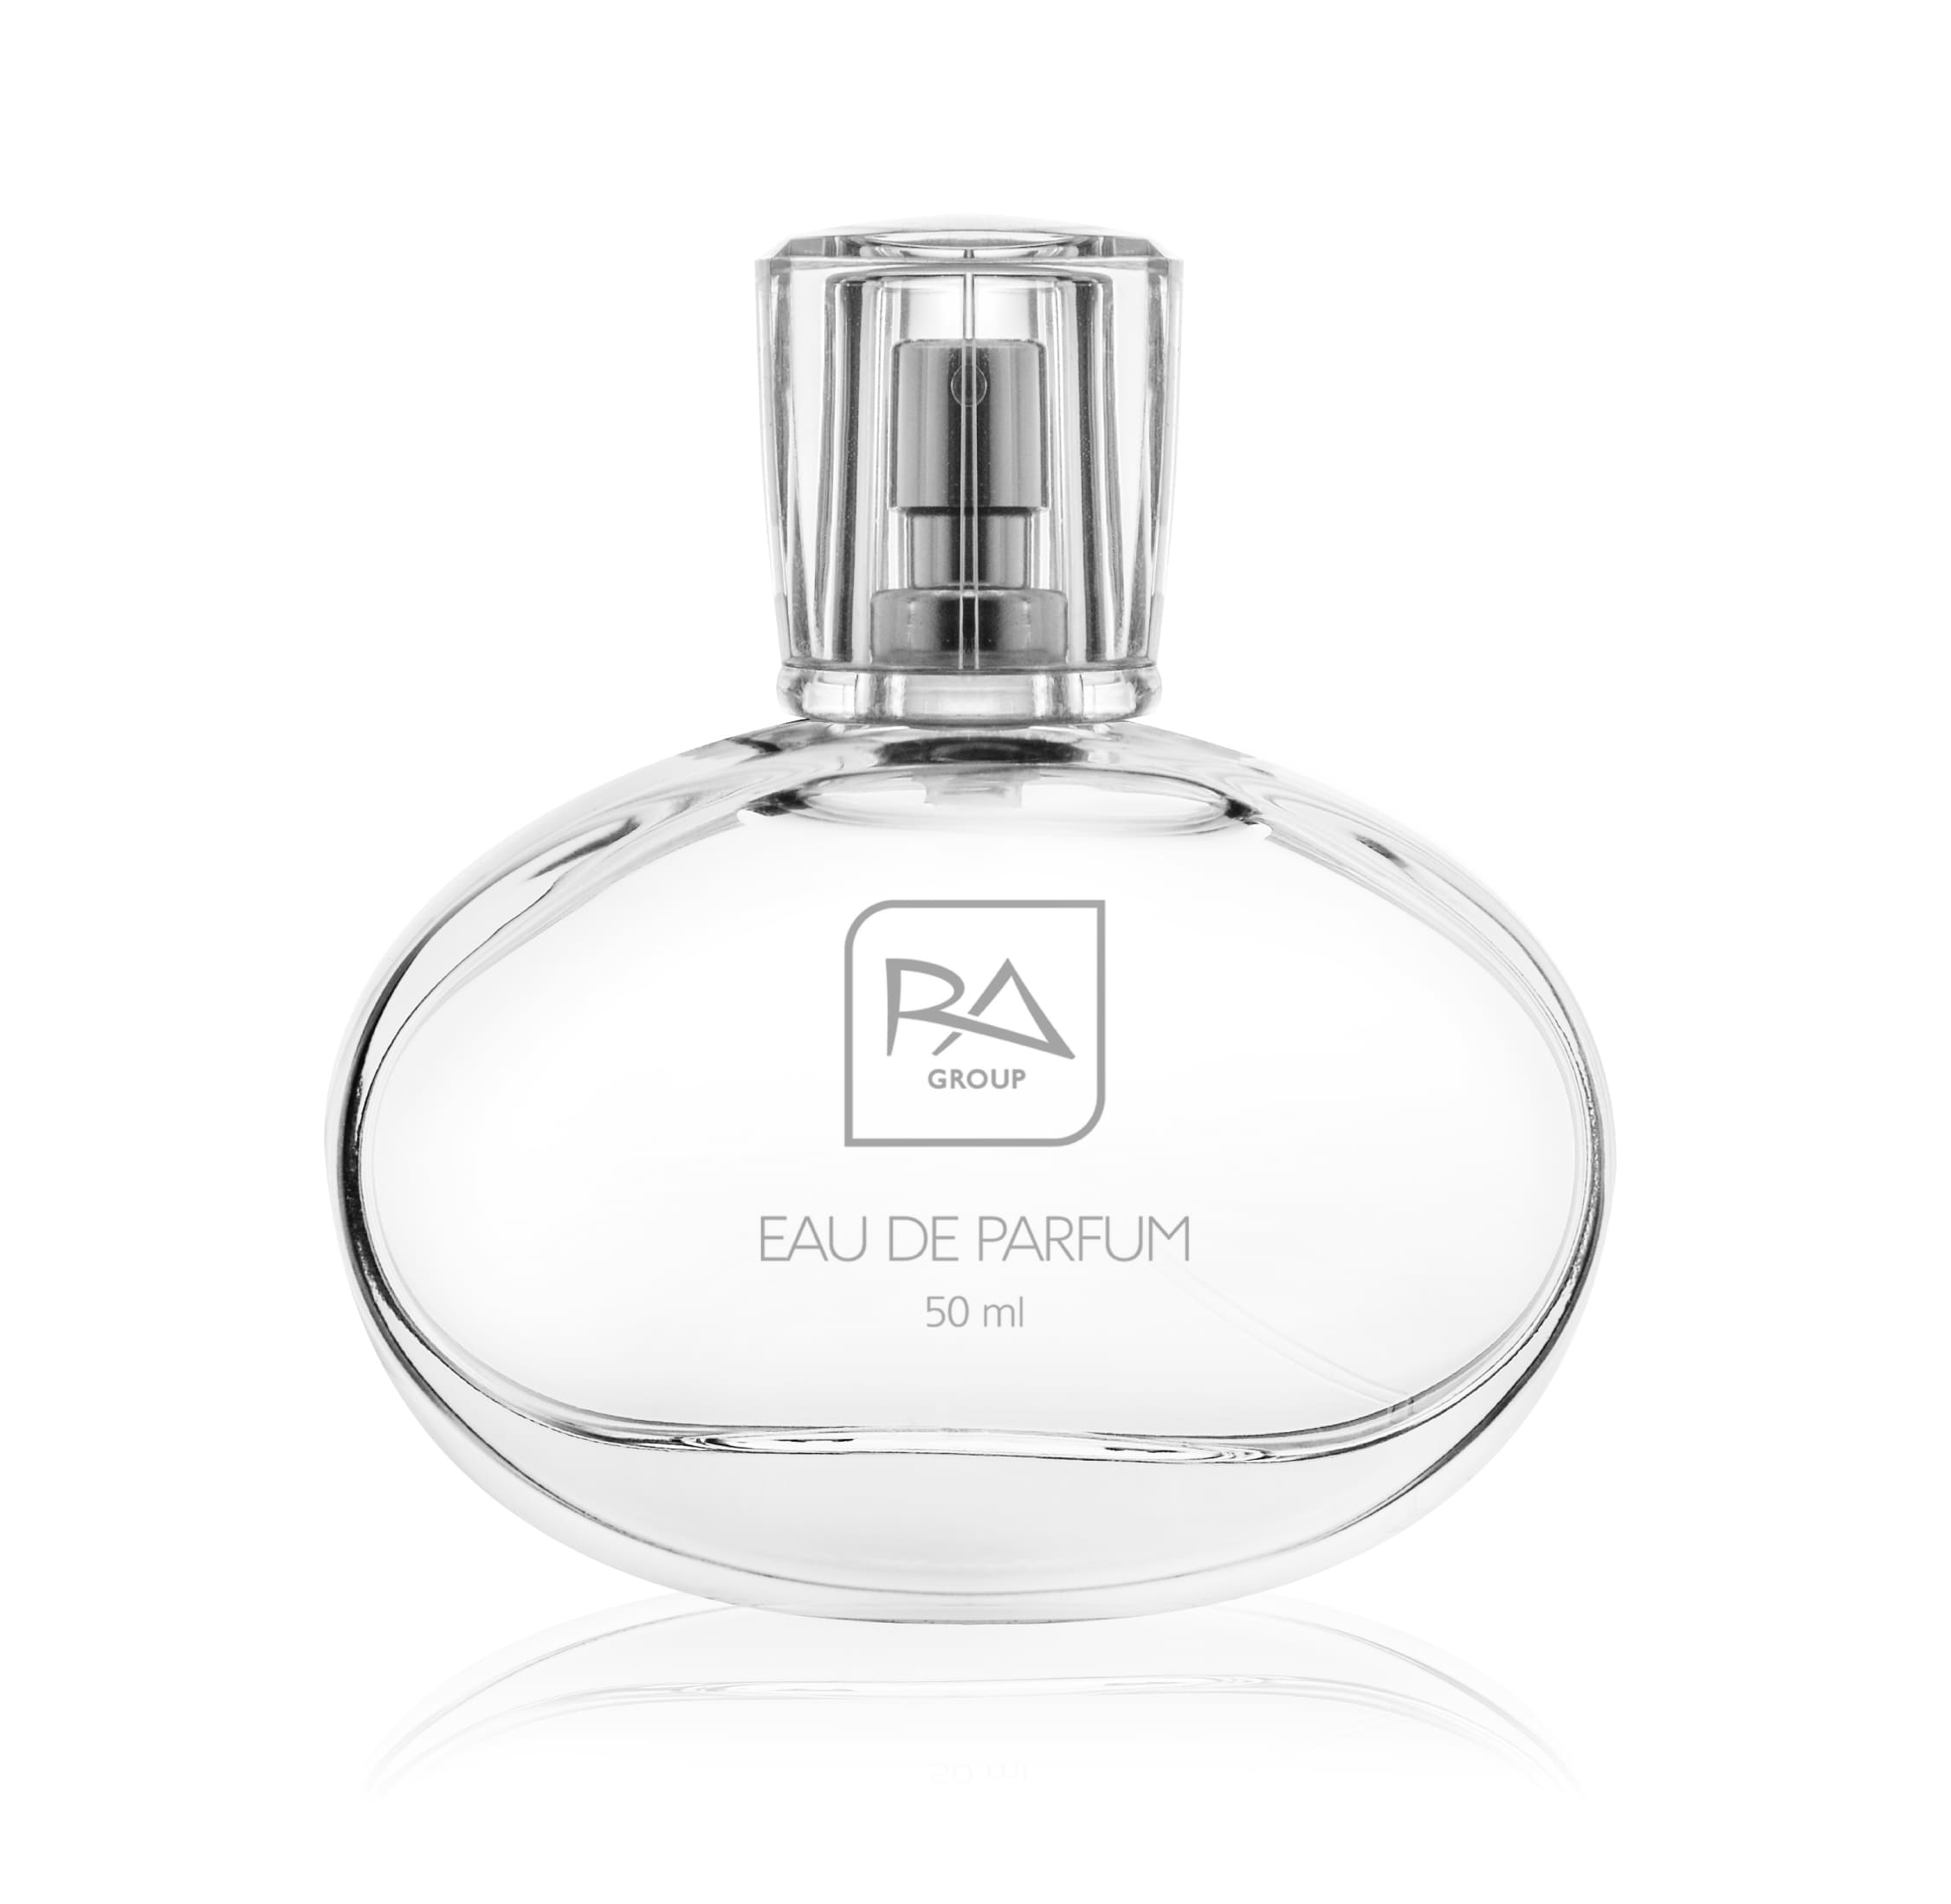 Eau de parfum RA33